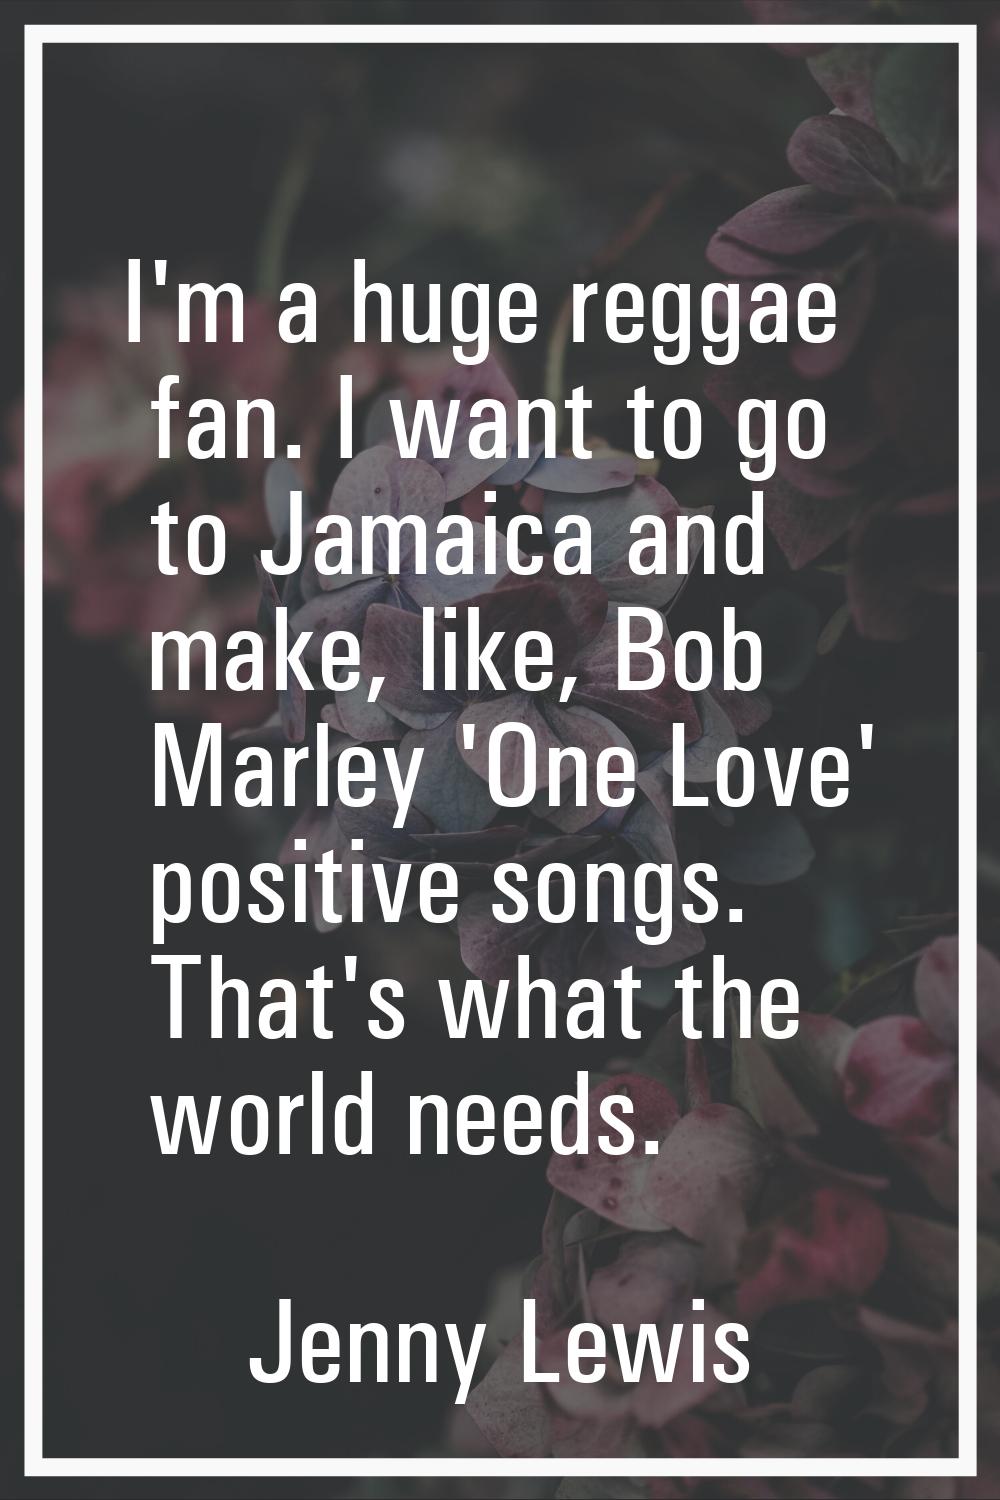 I'm a huge reggae fan. I want to go to Jamaica and make, like, Bob Marley 'One Love' positive songs